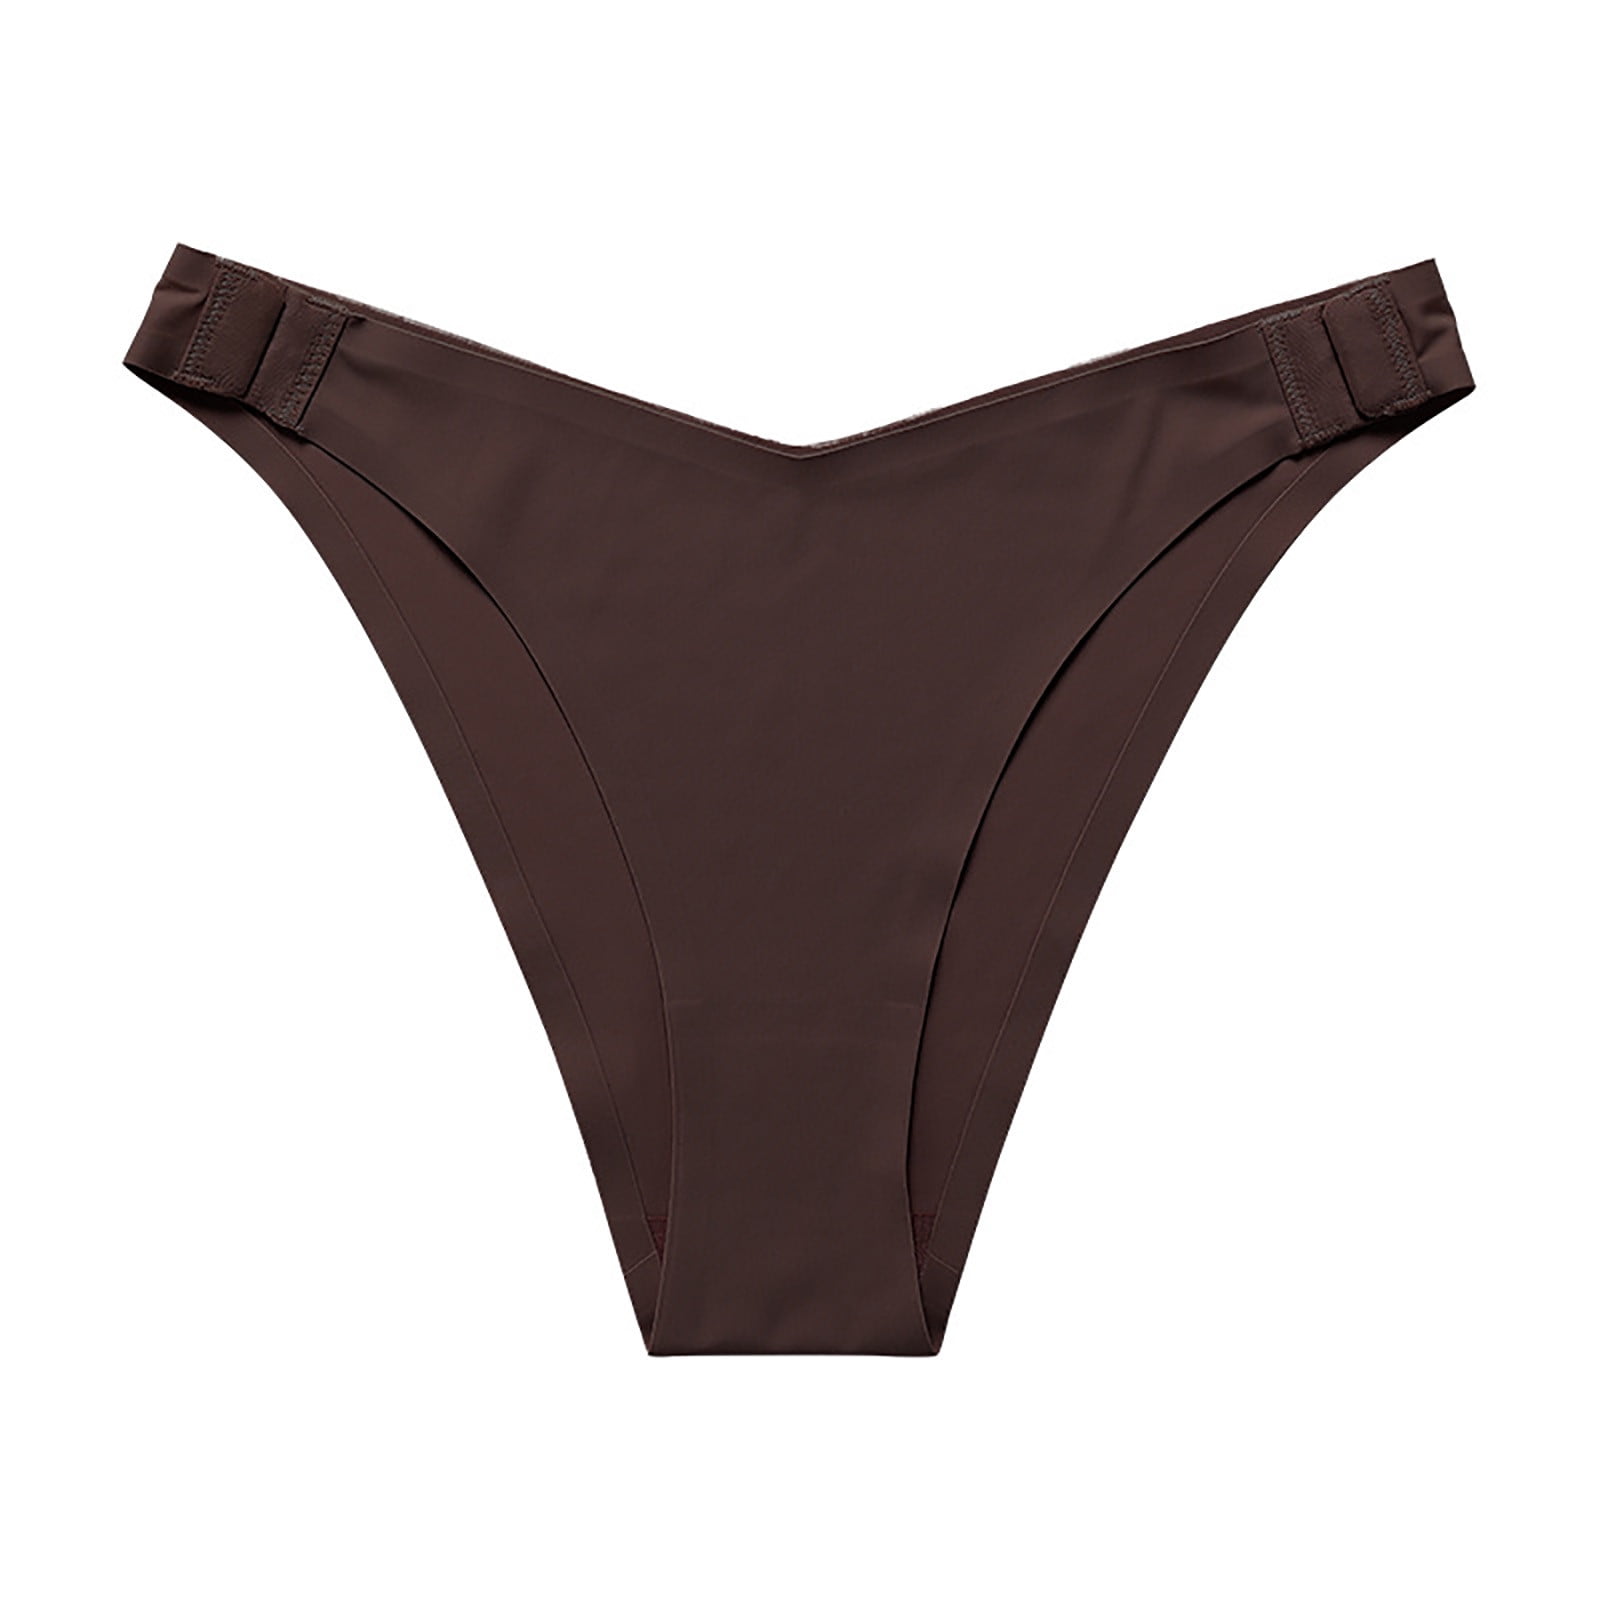 Wearslim® Premium Soft and Comfortable Cotton Bikini No Show Panty